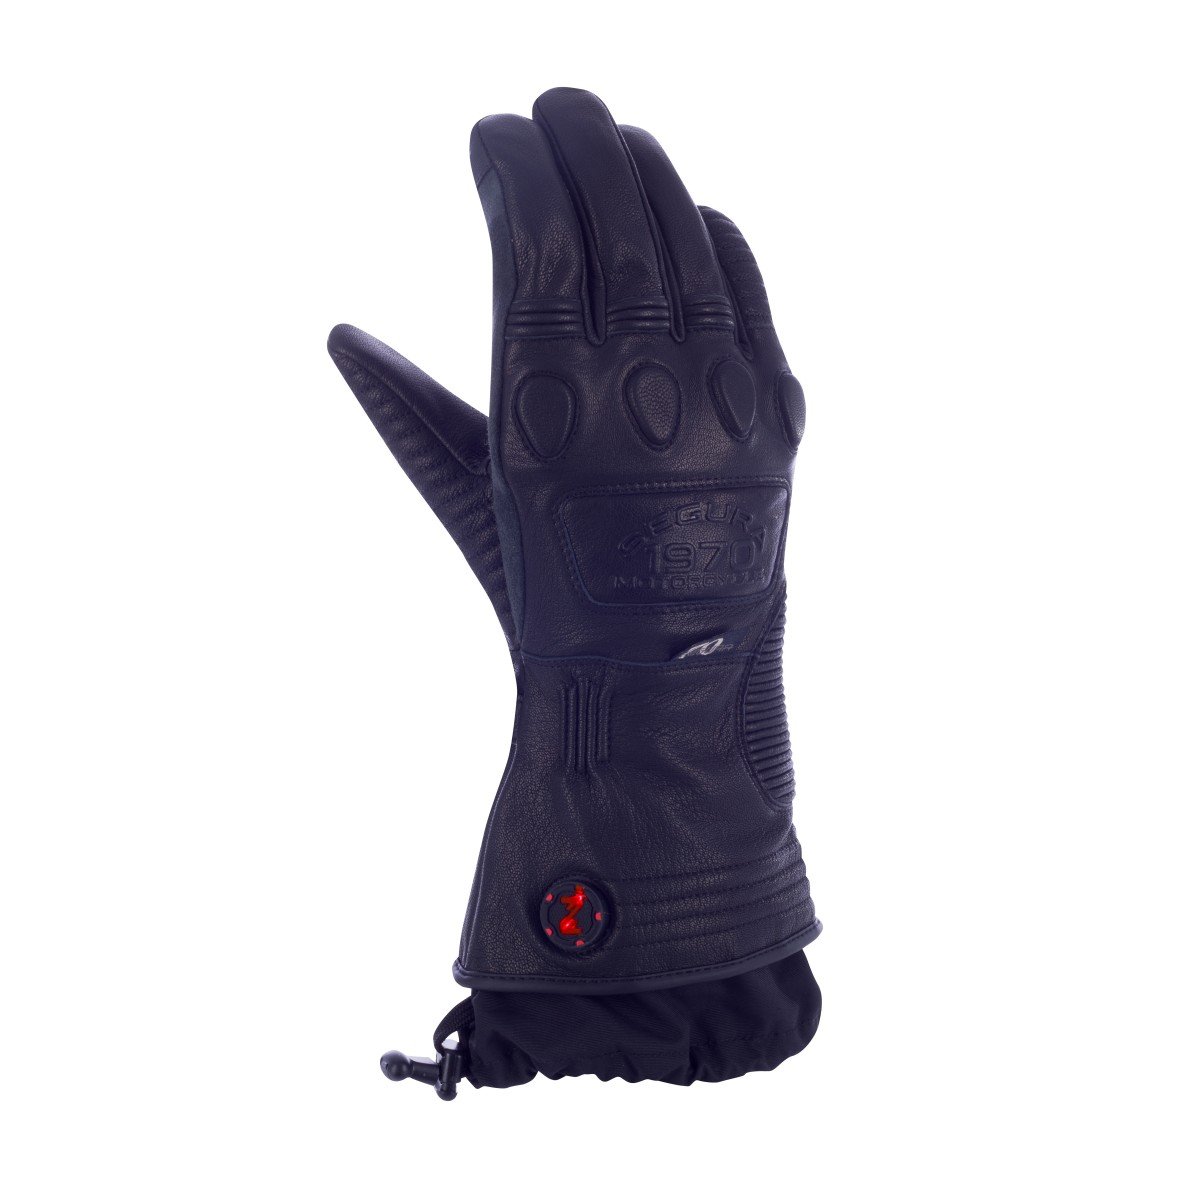 Image of Segura Shiro Black Heated Gloves Size T11 ID 3660815151846